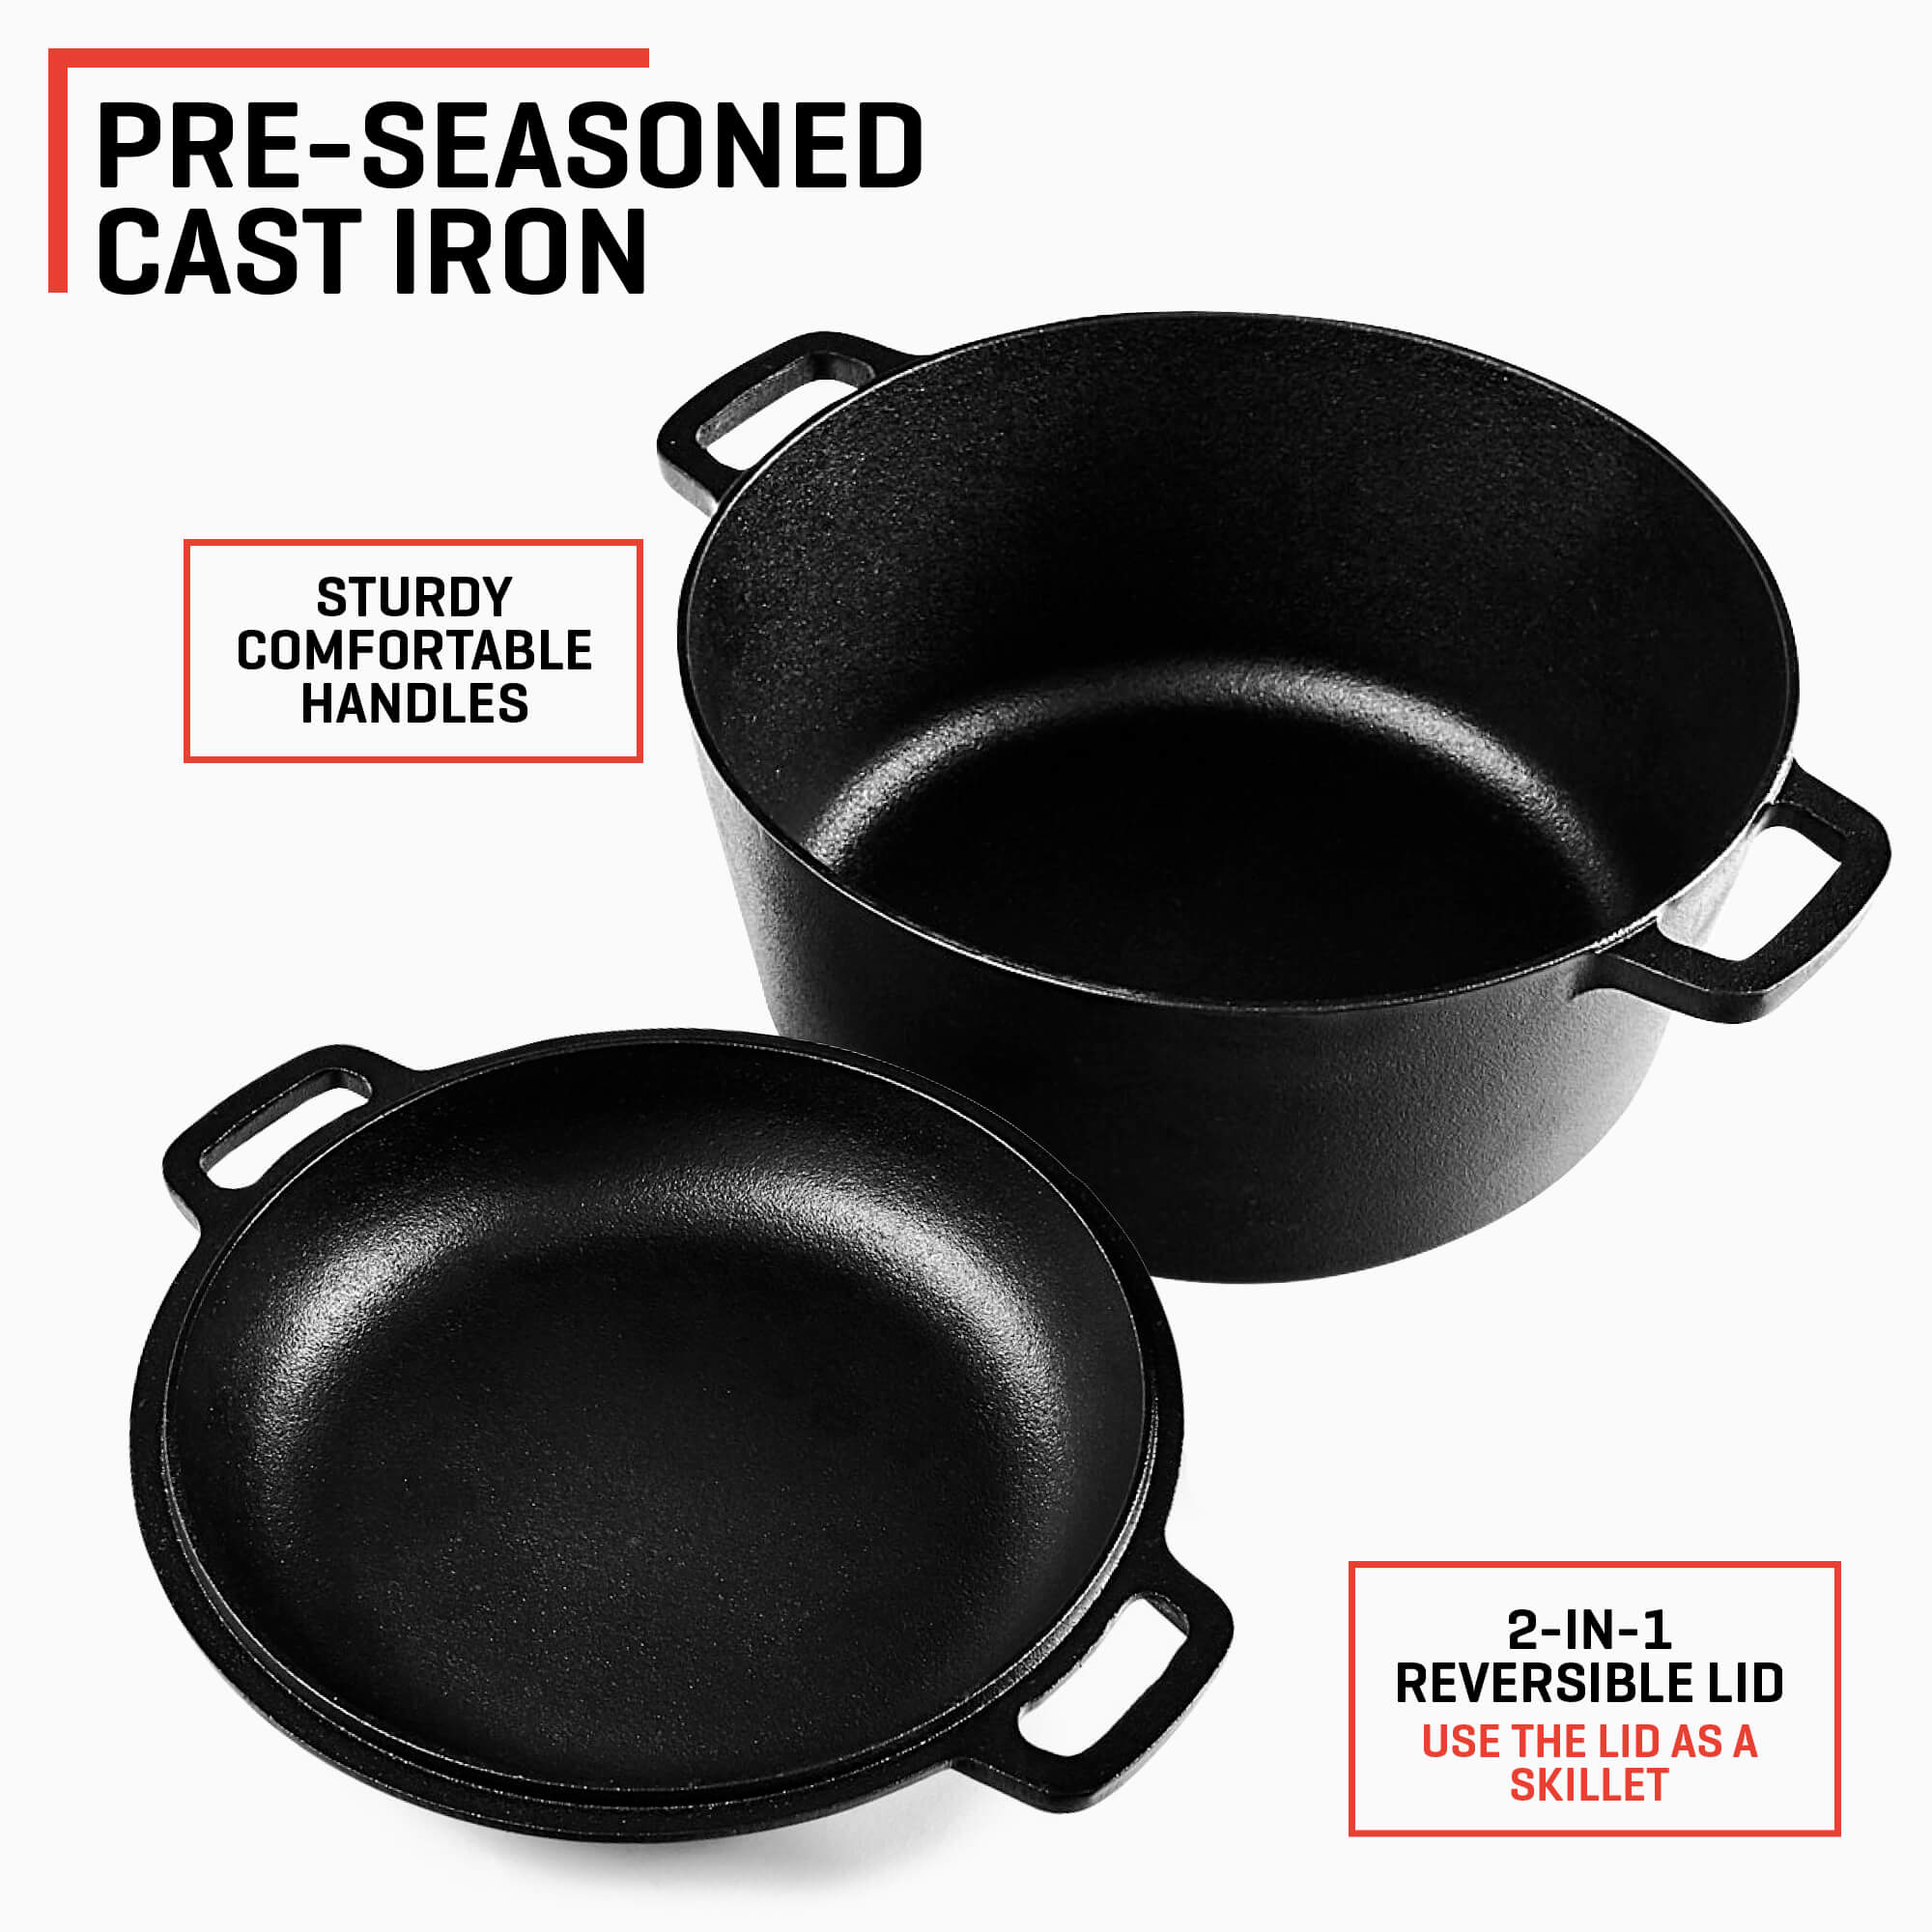 Cast Iron 5L Casserole Dish - Ovenproof Pre-Seasoned Pot